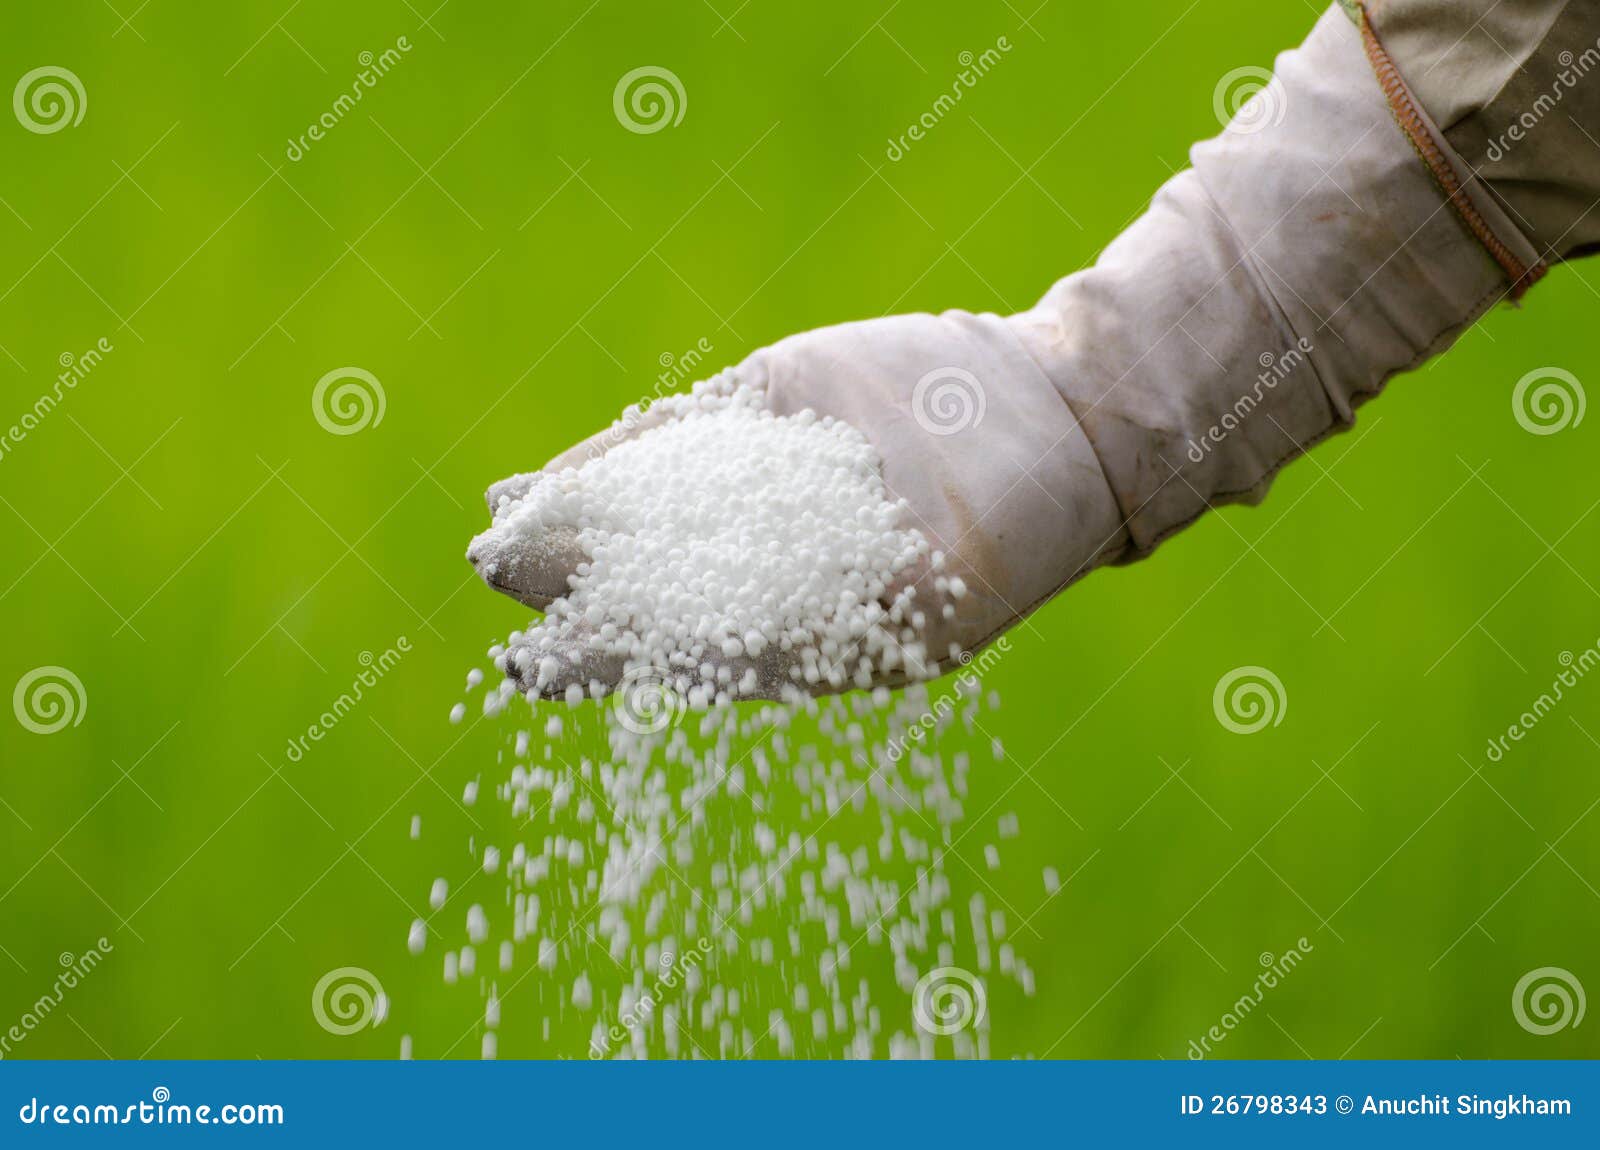 farmer is pouring chemical fertilizer